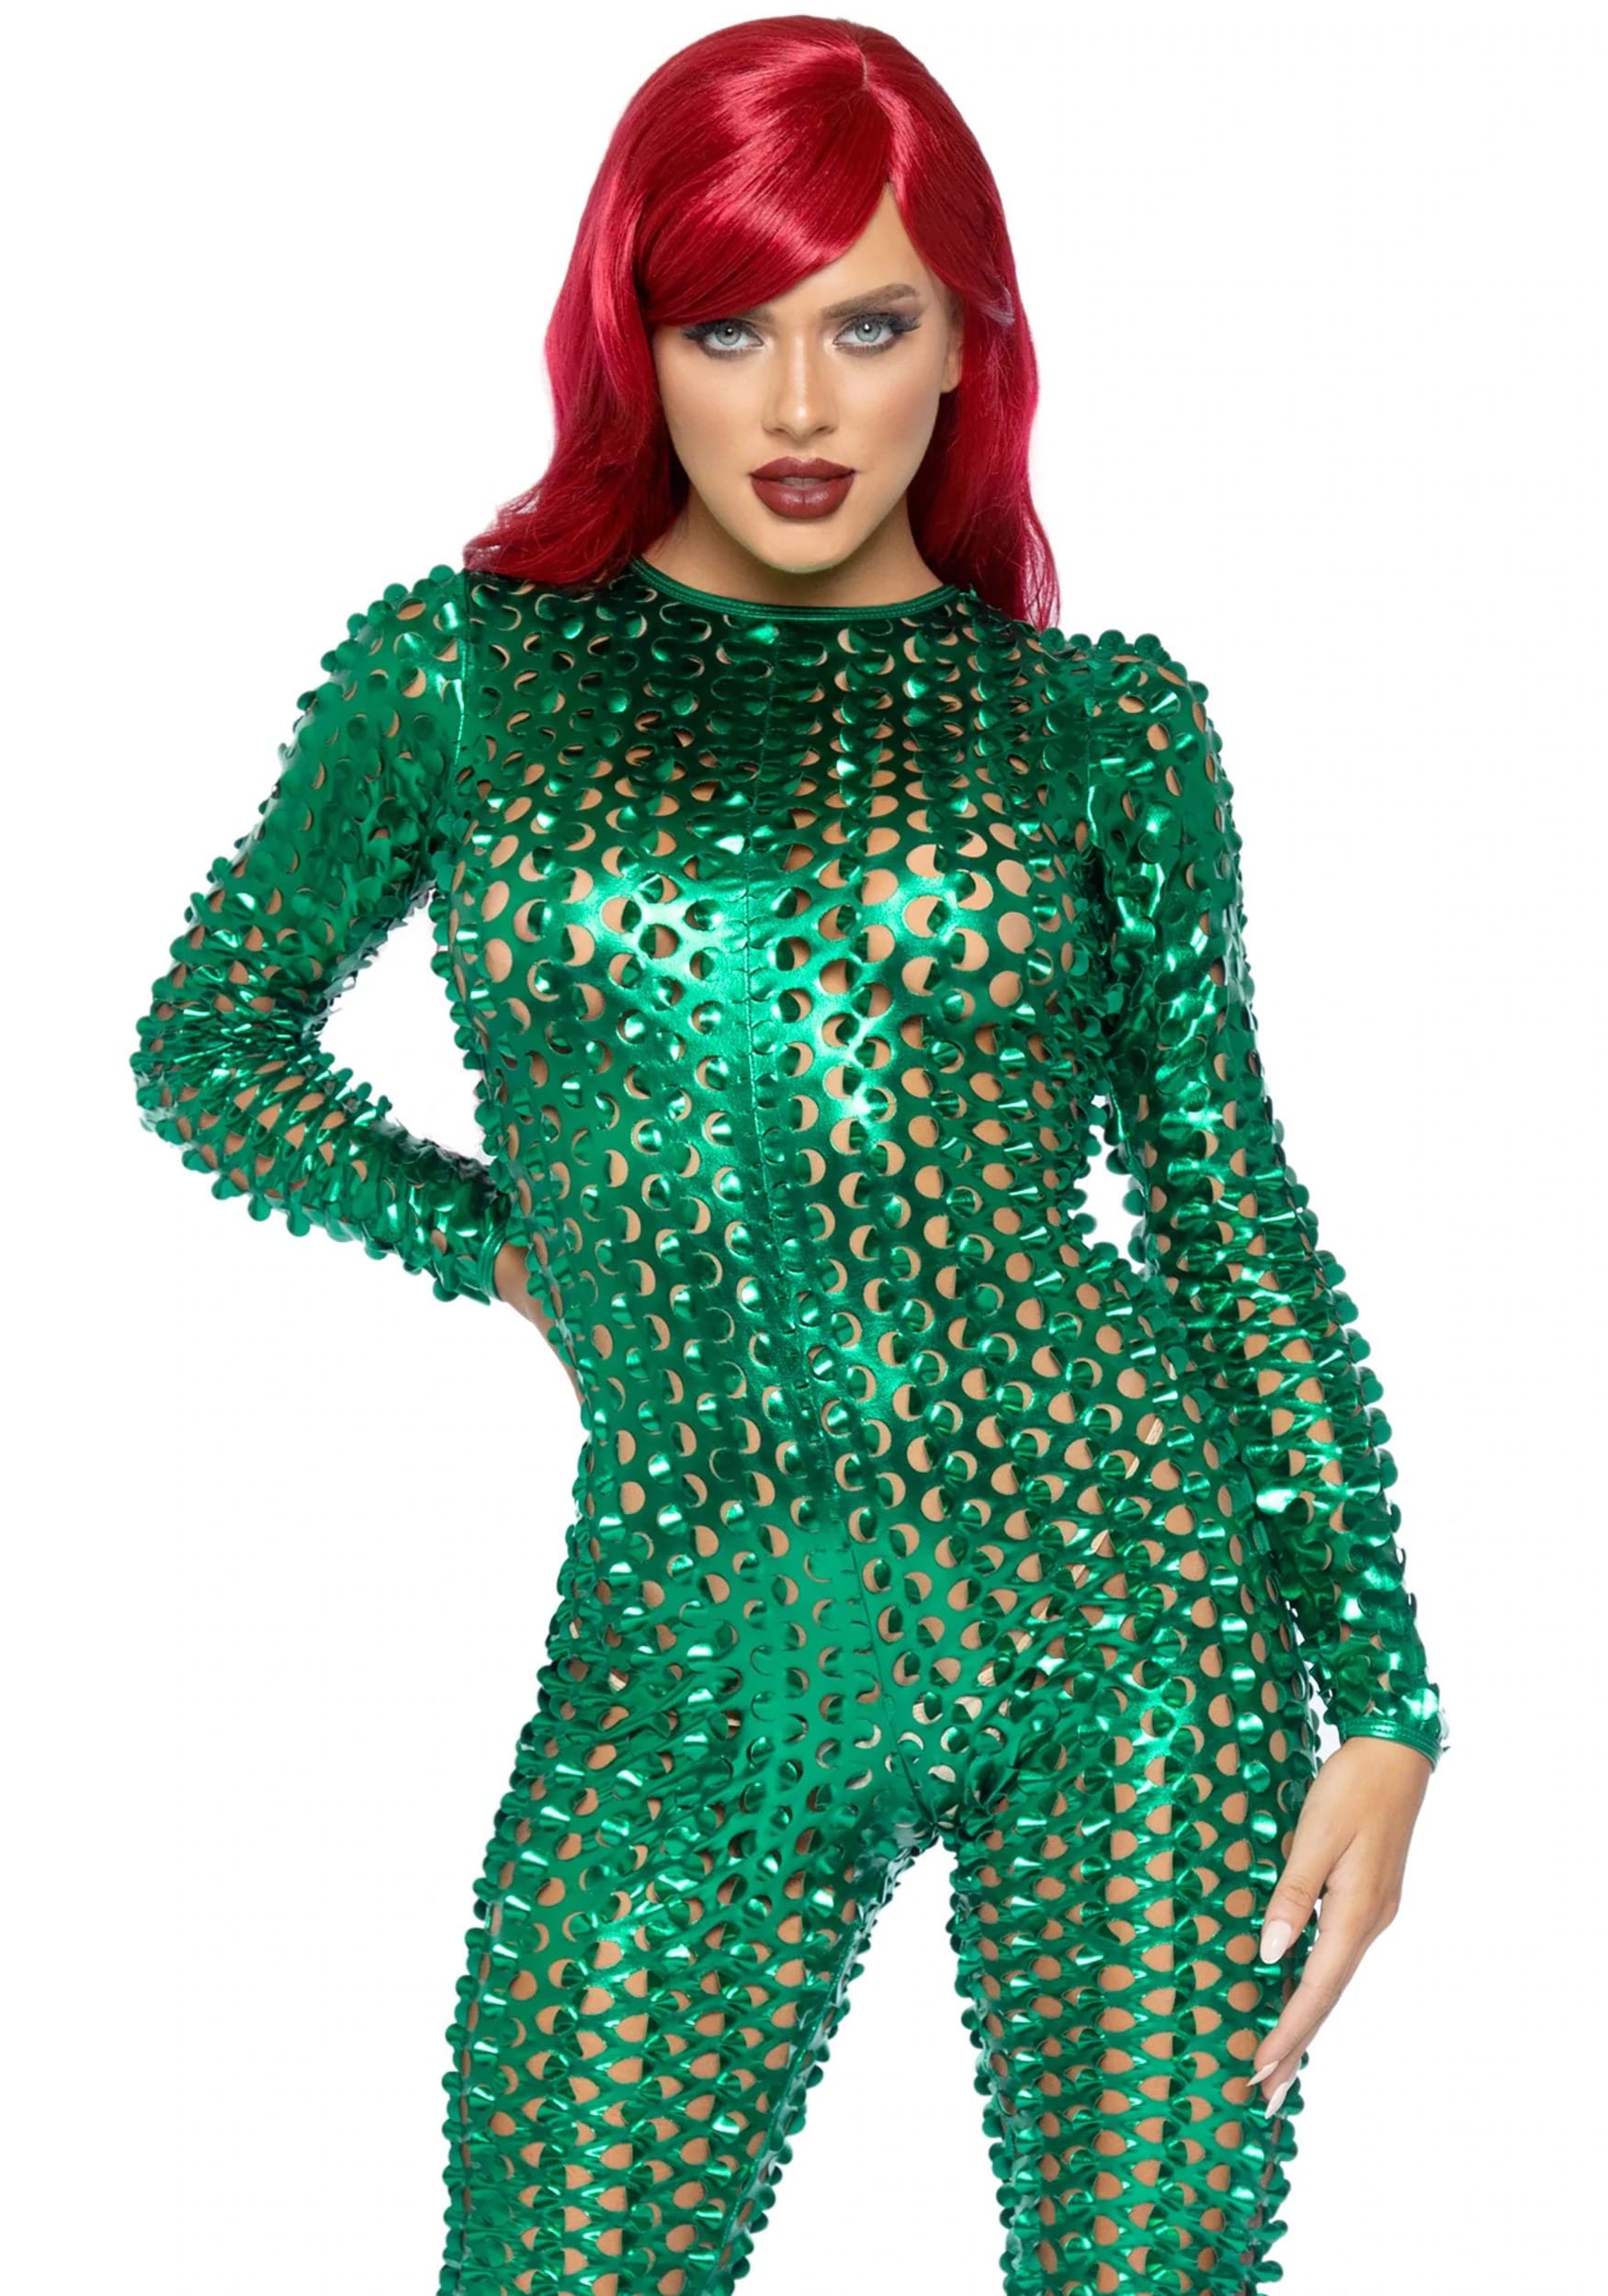 Women’s Green Laser Cut Metallic Catsuit Costume